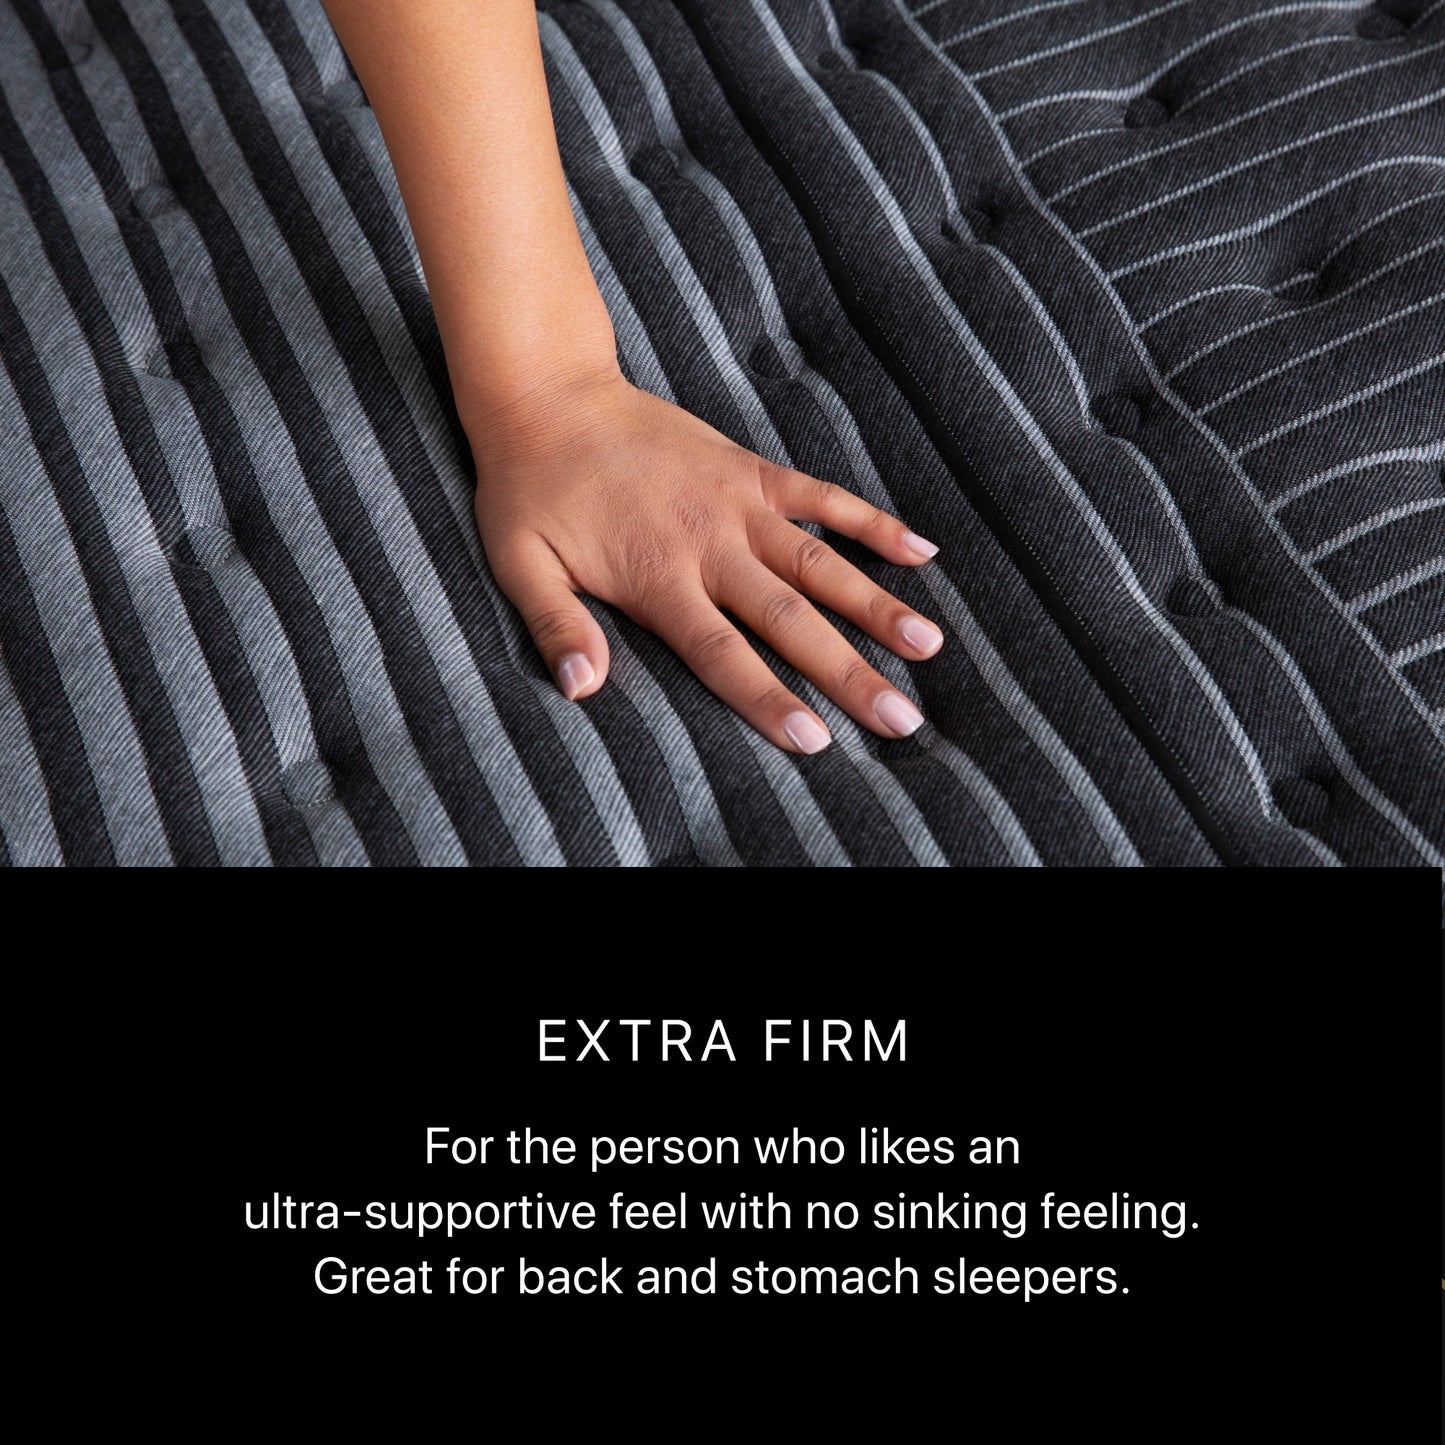 Beautyrest Black Series One Extra Firm Mattress - Comfort Level Image